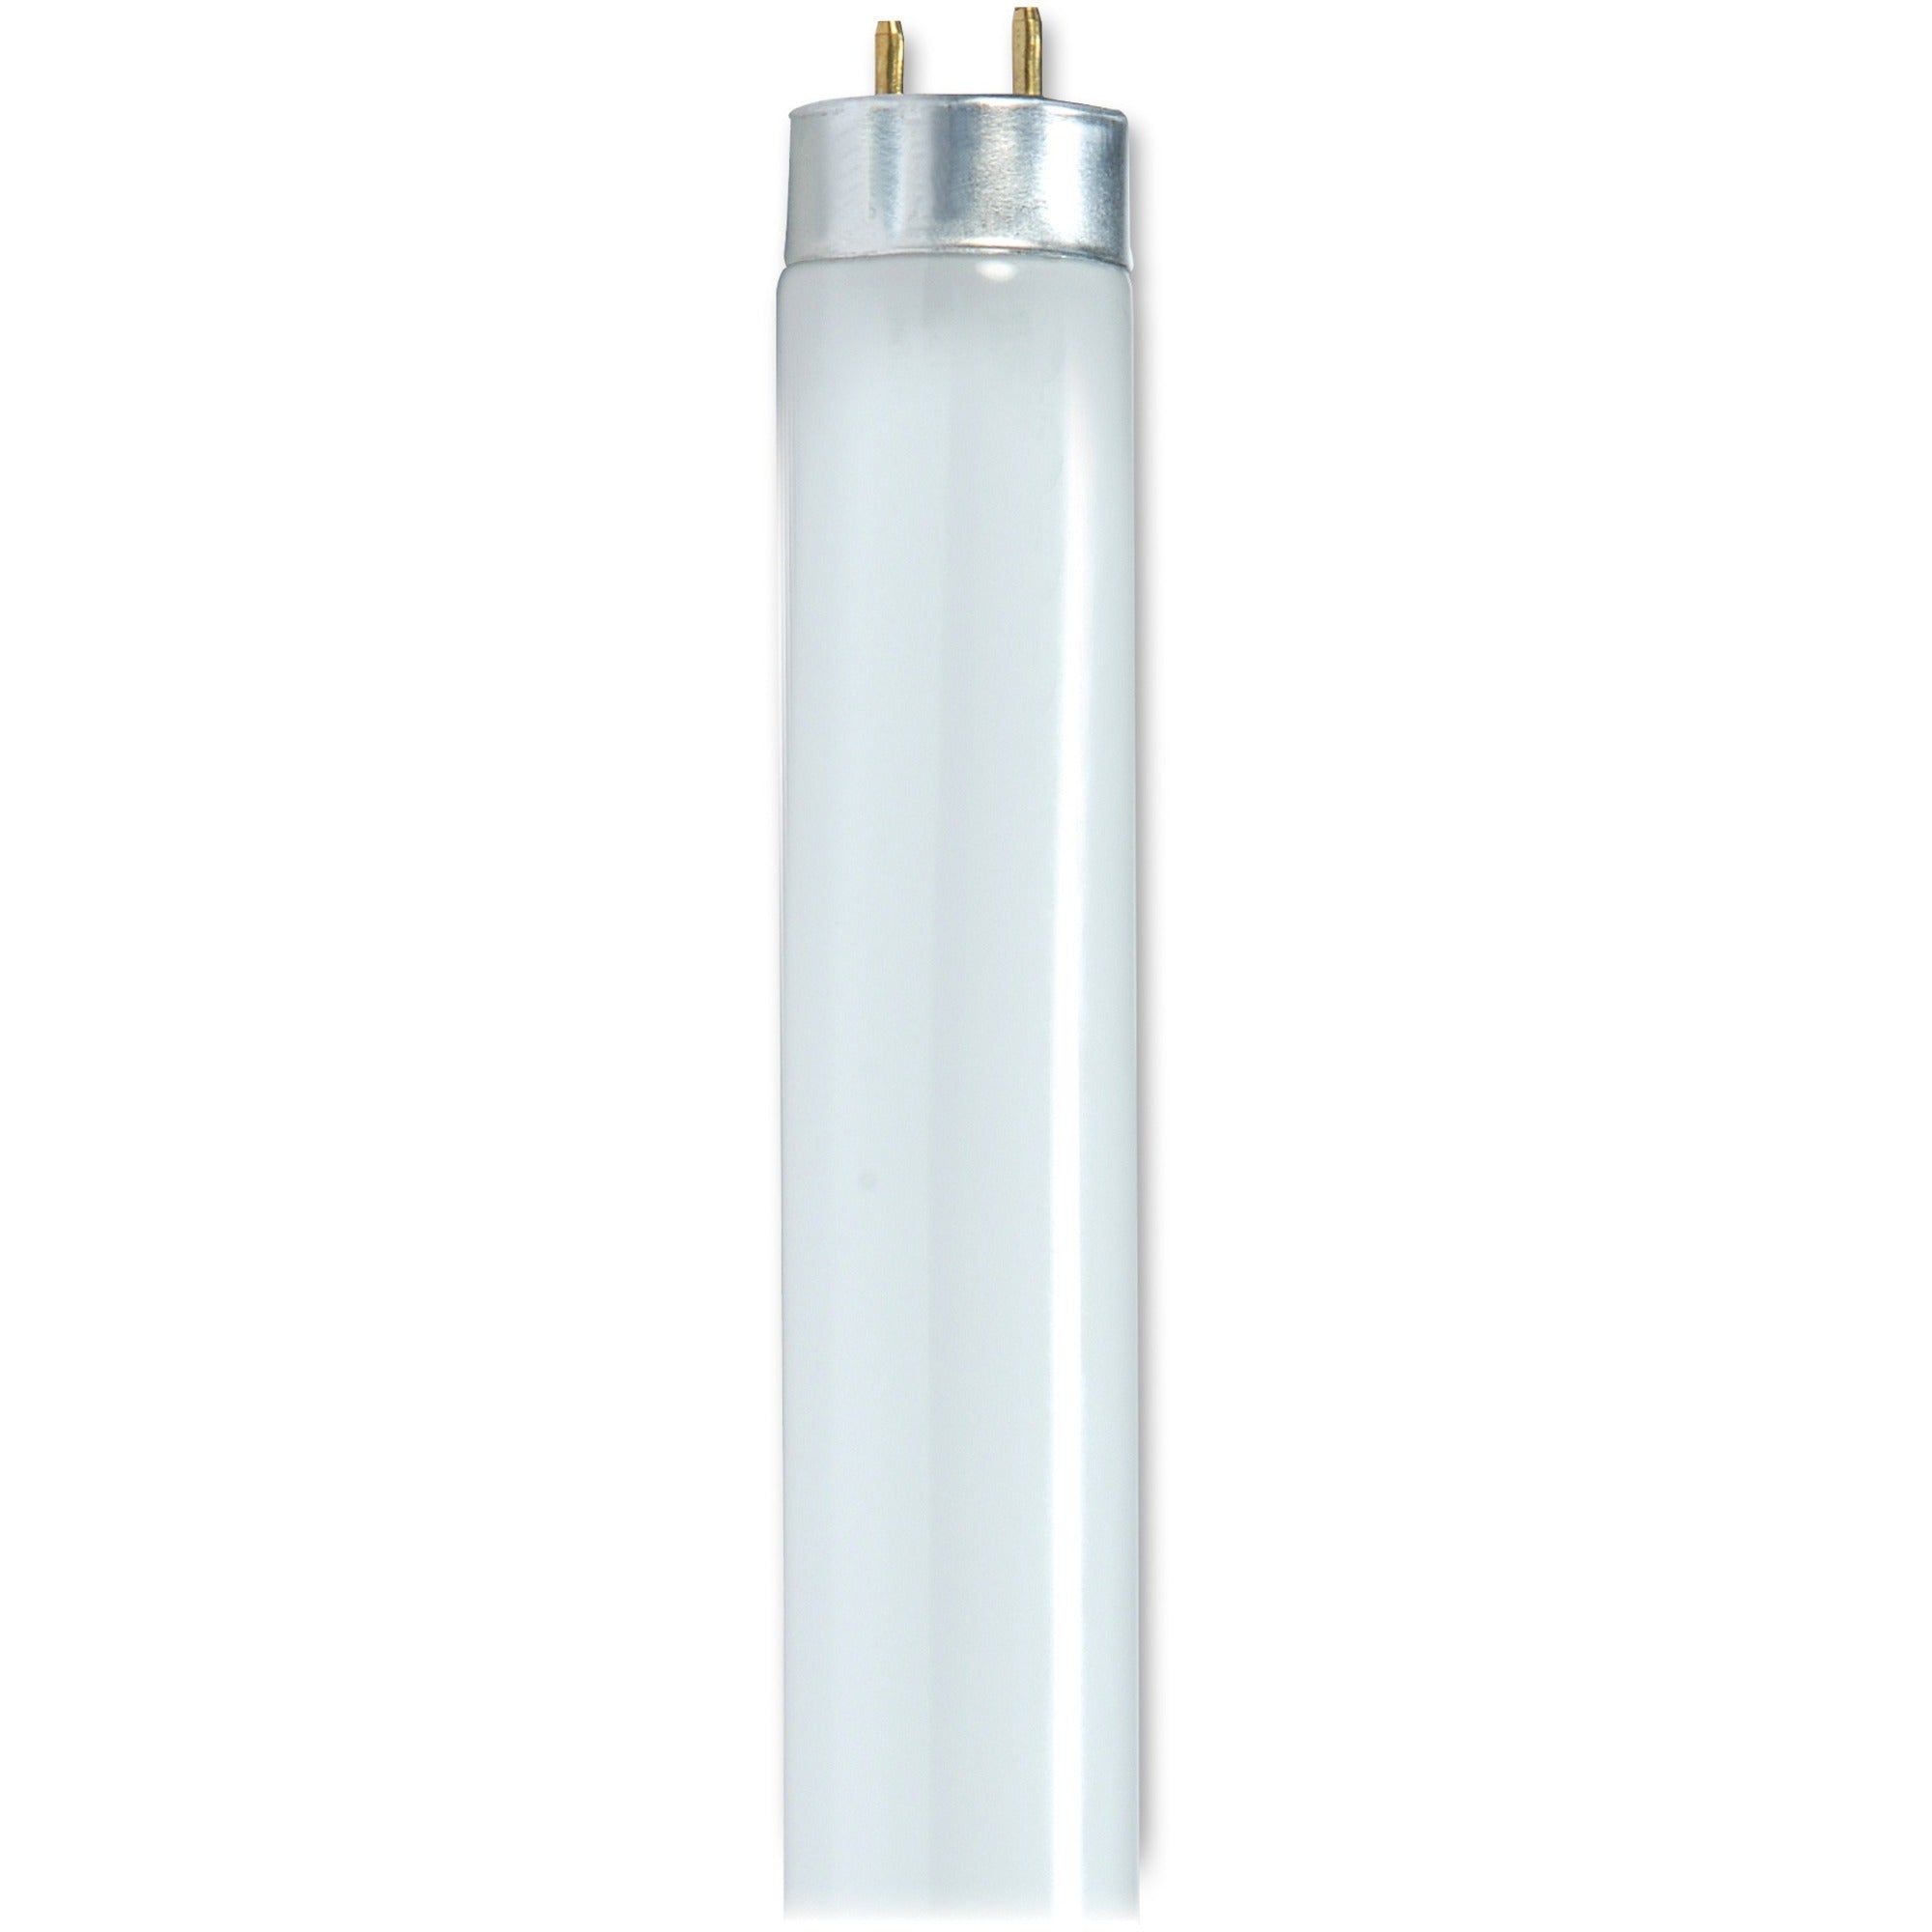 Satco 25-watt 48" T8 Fluorescent Bulb - 25 W - 120 V AC - 2400 lm - T8 Size - Cool White Light Color - G13 Base - 30000 Hour - 6920.3degF (3826.8degC) Color Temperature - 85 CRI - Energy Saver - 30 / Carton - 